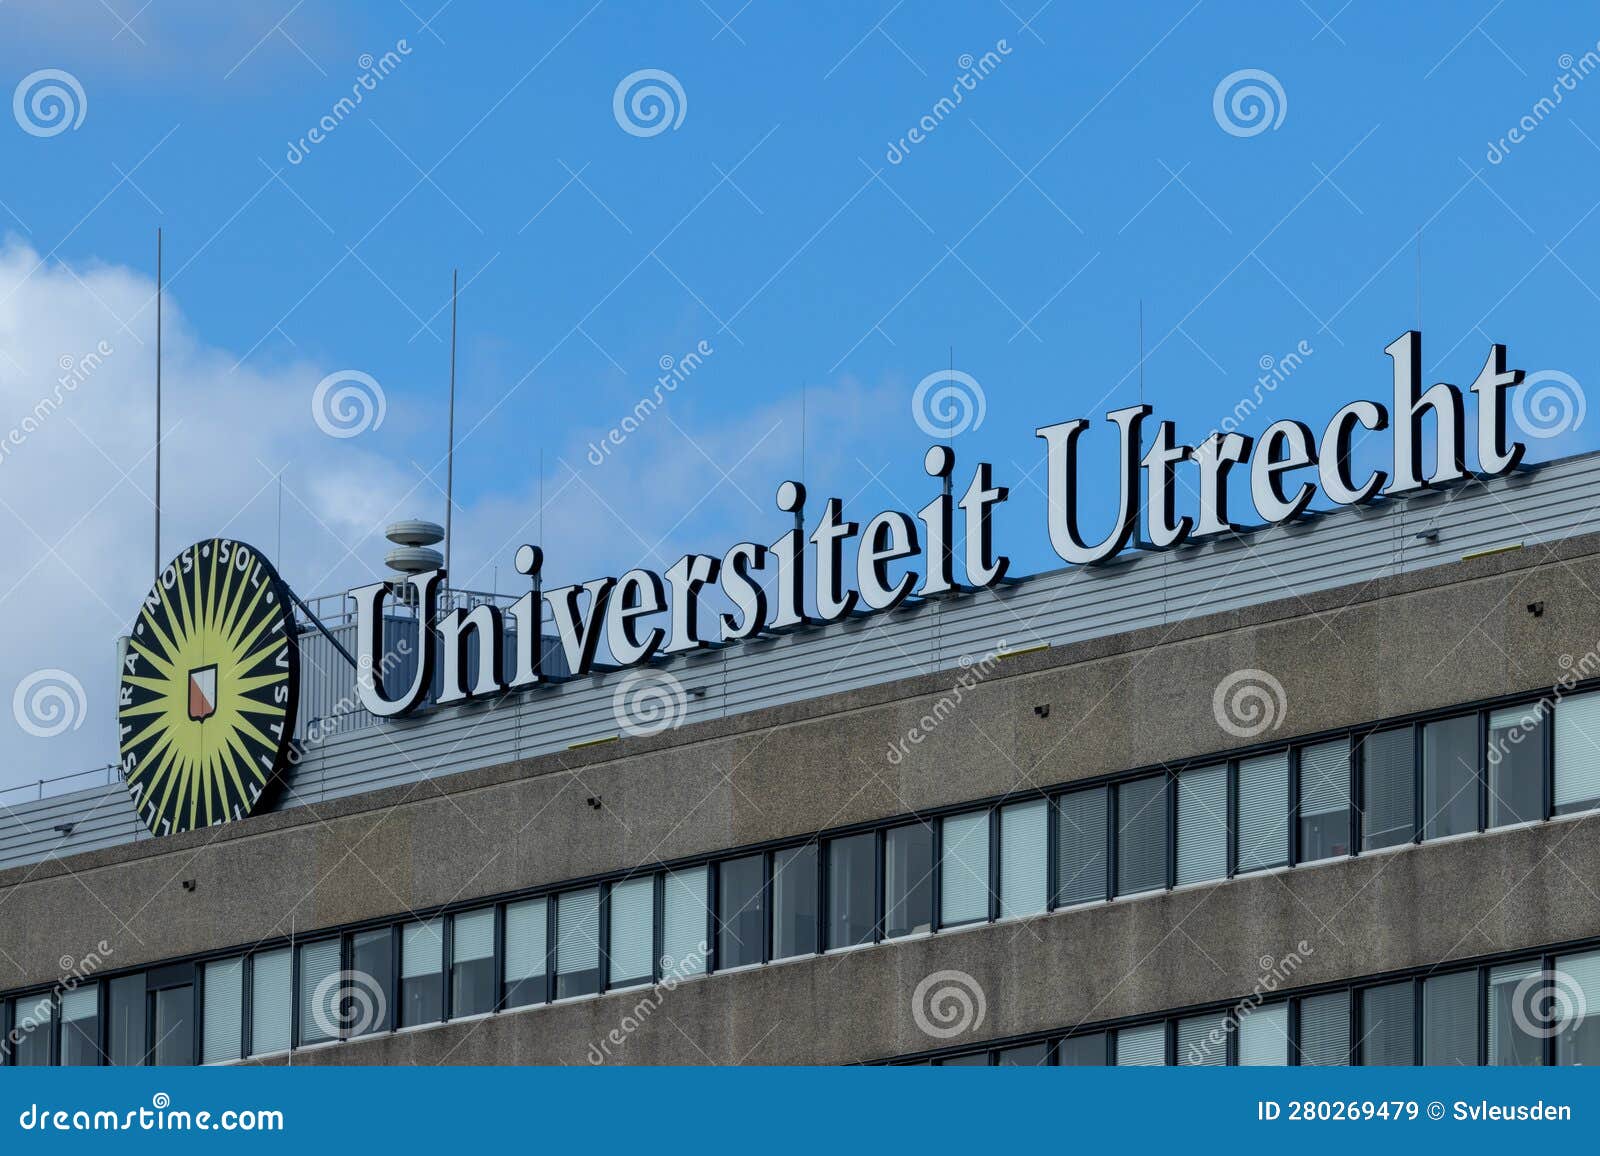 Universiteit Utrecht Building Sign Logo. Editorial Stock Image - Image ...